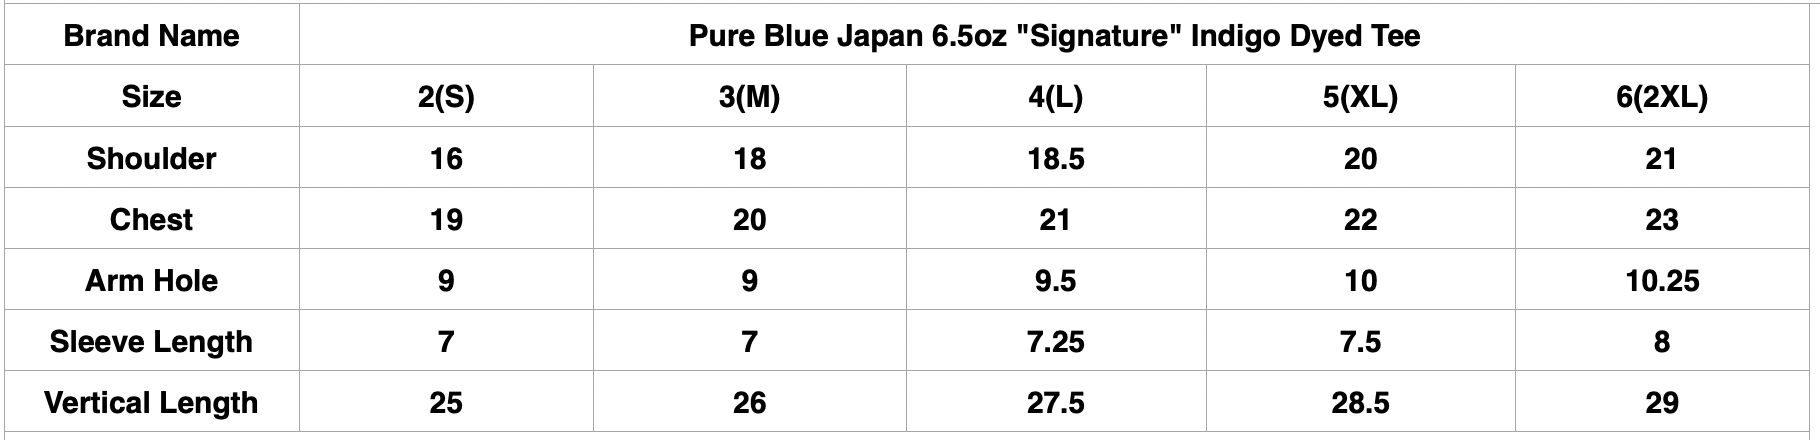 Pure Blue Japan 6.5oz "Signature" Indigo Dyed Tee (Genuine Indigo)